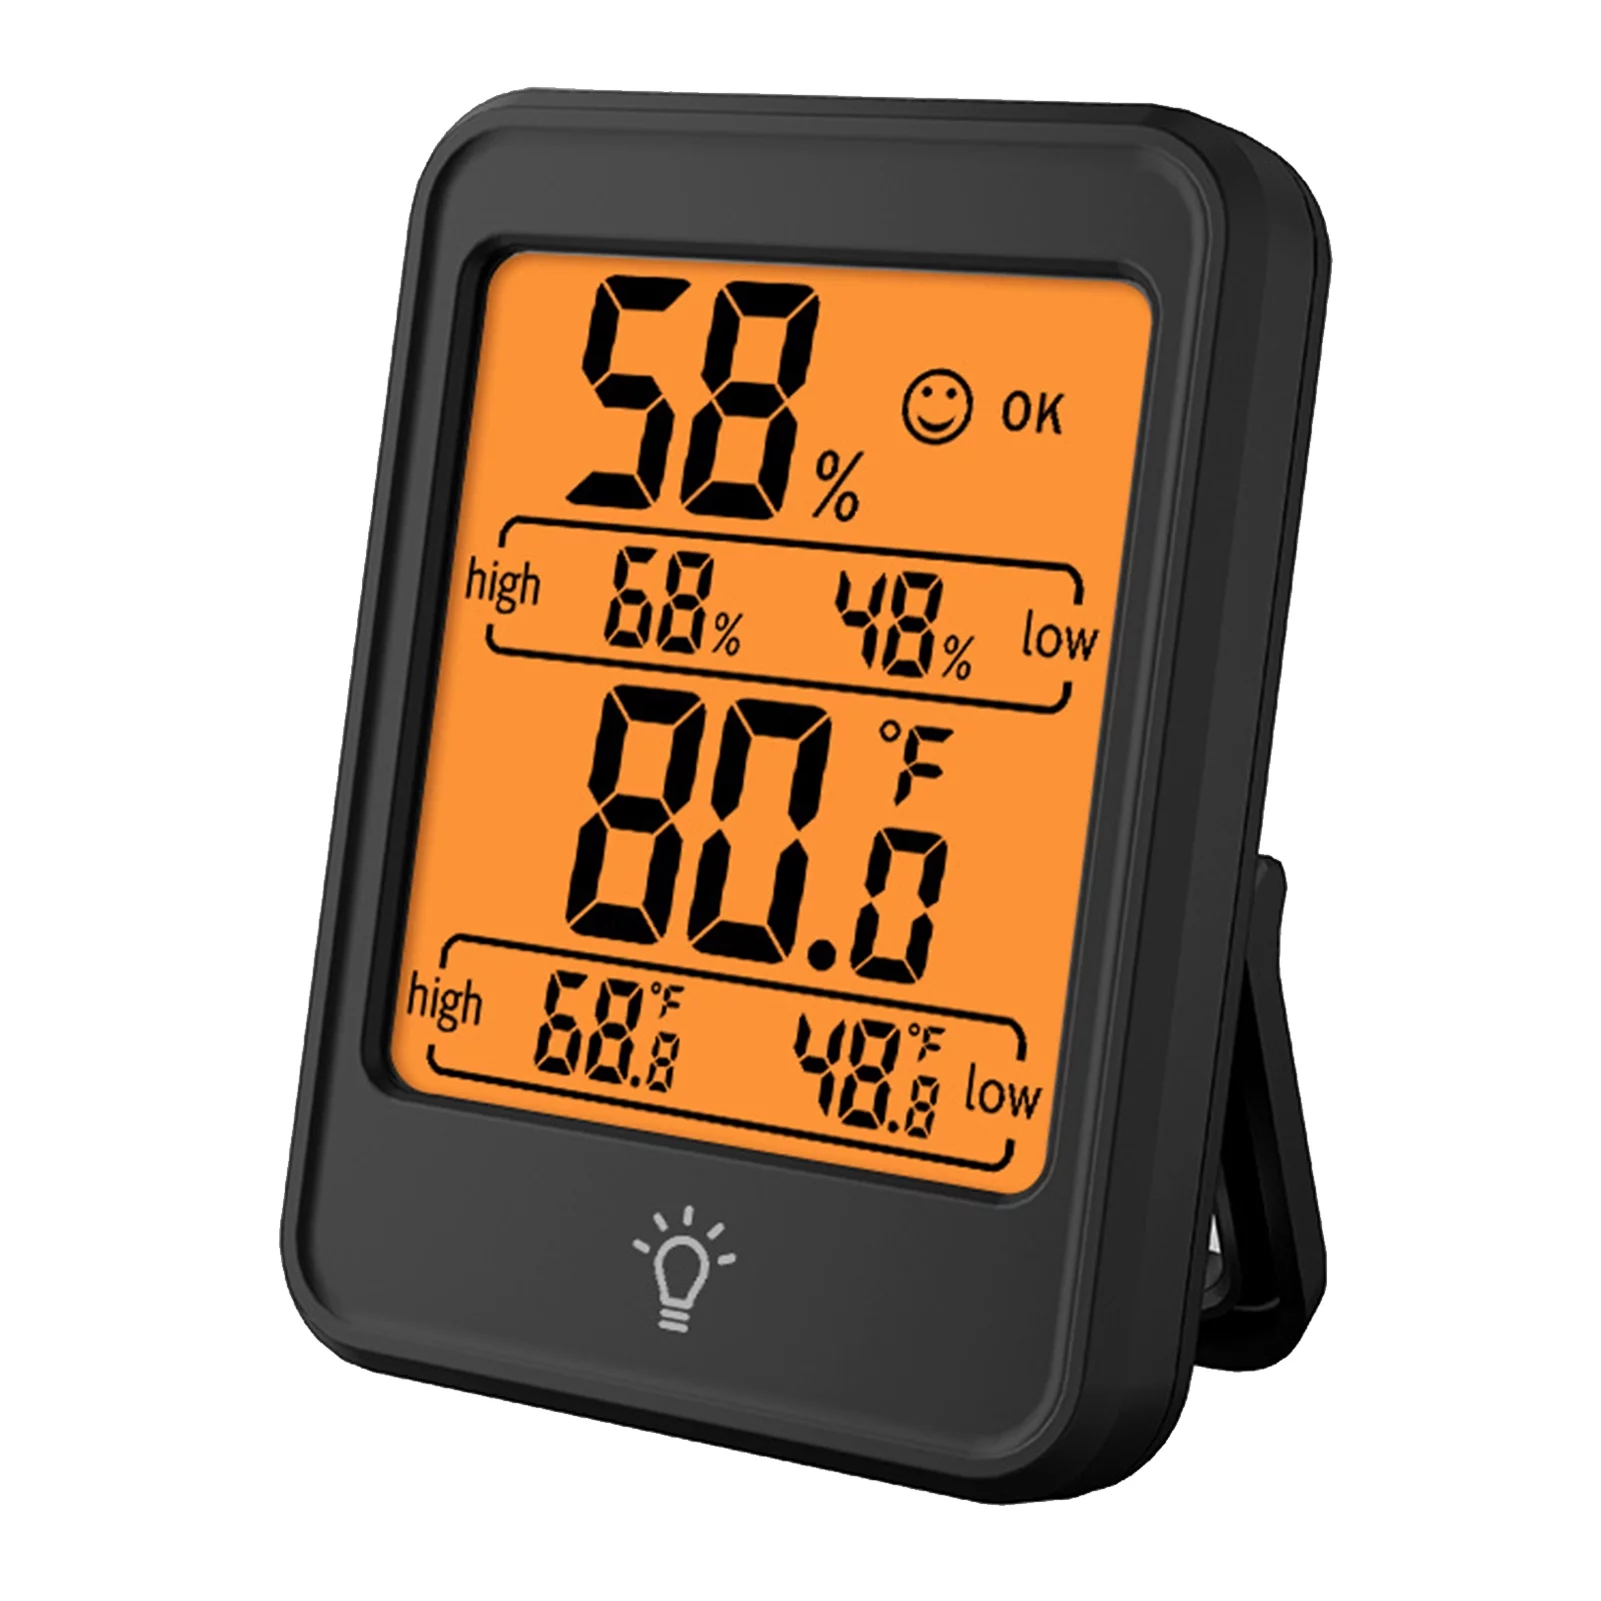 ThermoPro TP50 Digital Hygrometer Indoor Thermometer Algeria